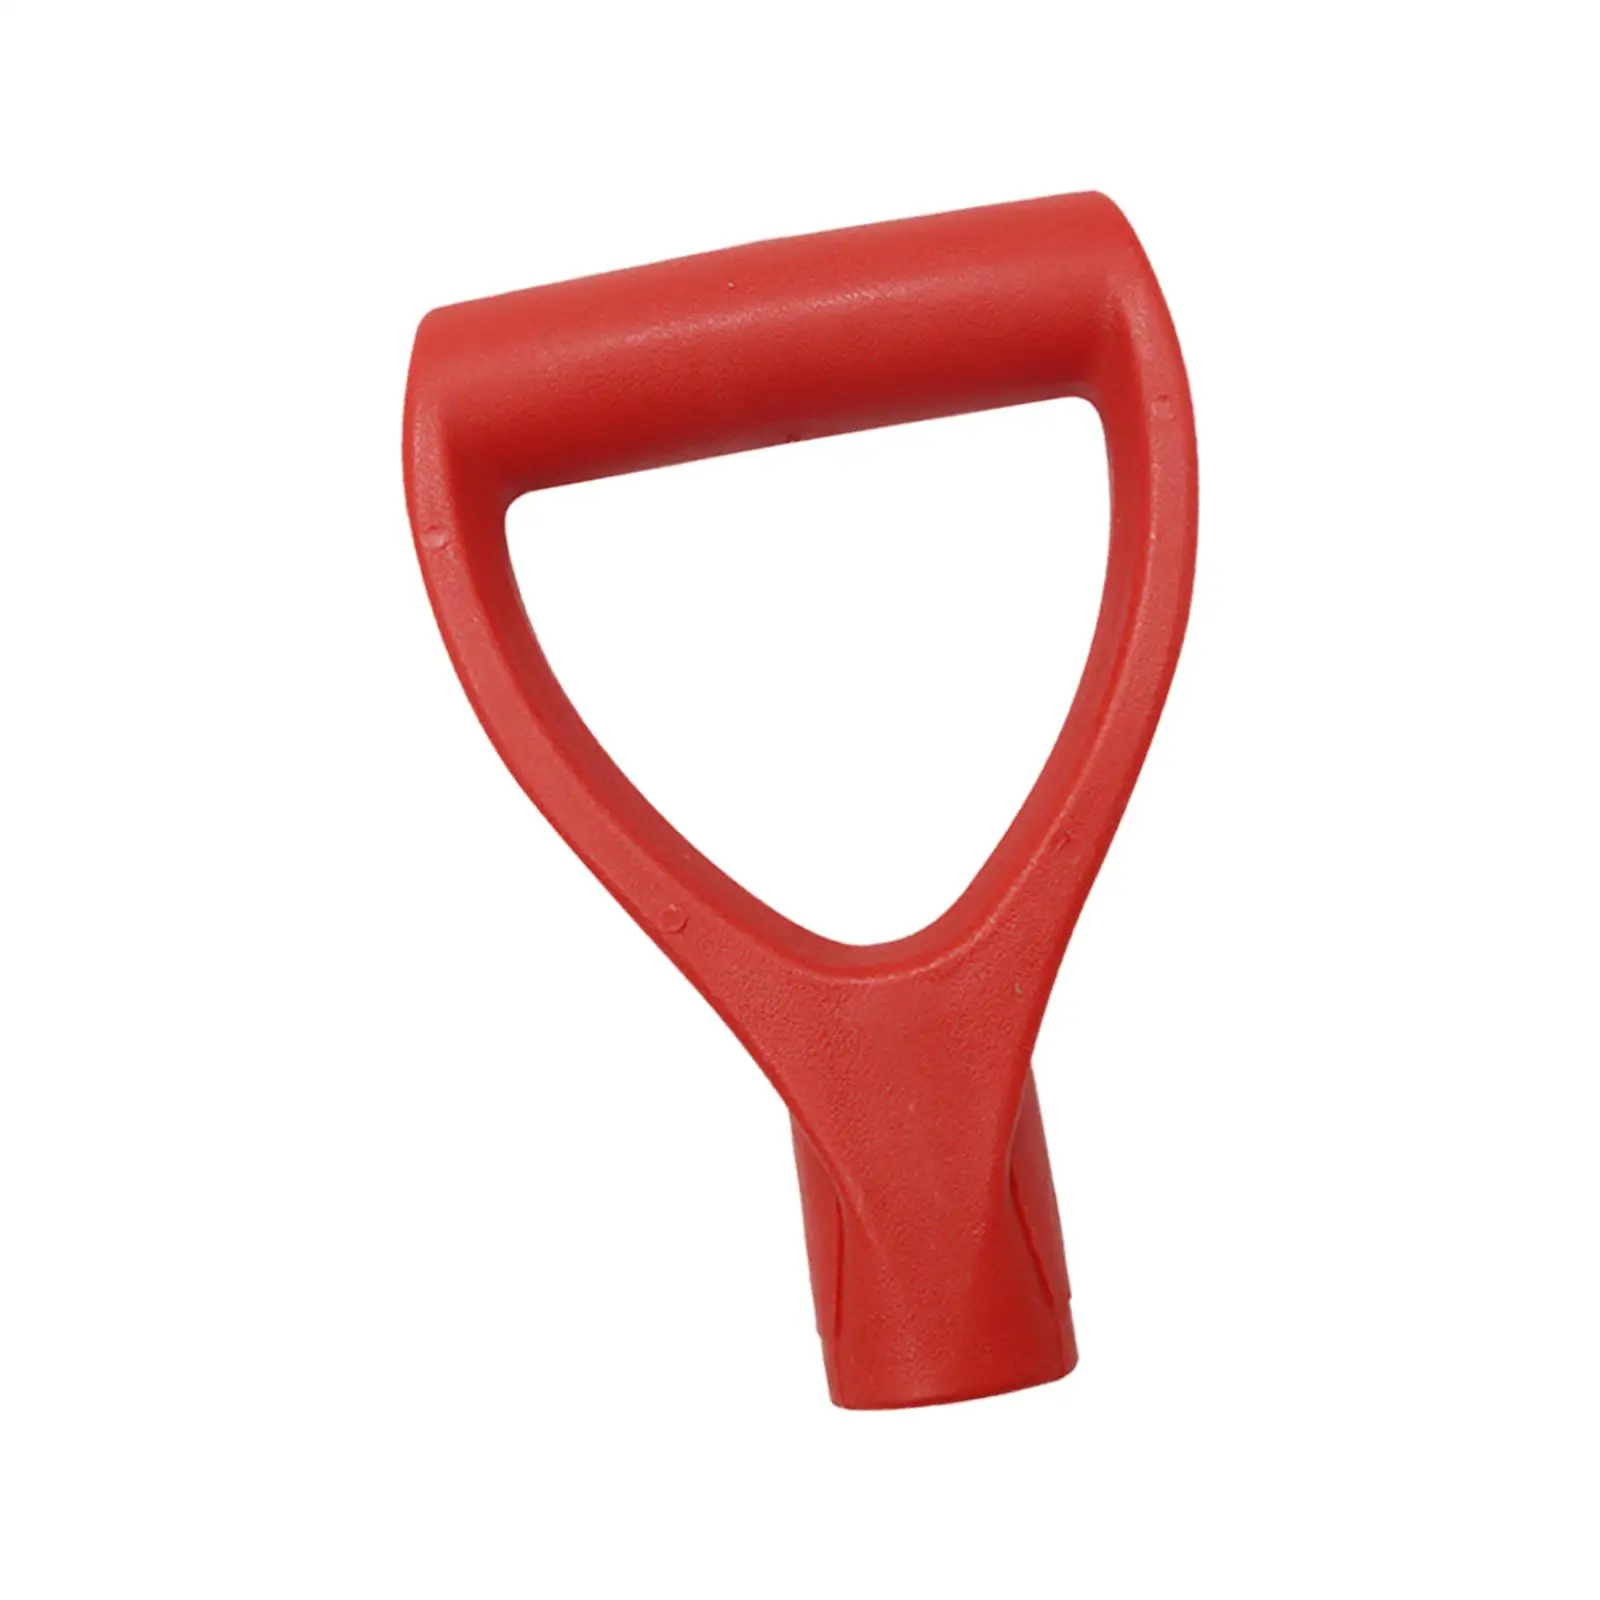 Shovel Grip Handle Red Ergonomic Durable Nonslip Spade Handle Garden Accessories for Digging Raking Gardening Tool Garden Shovel